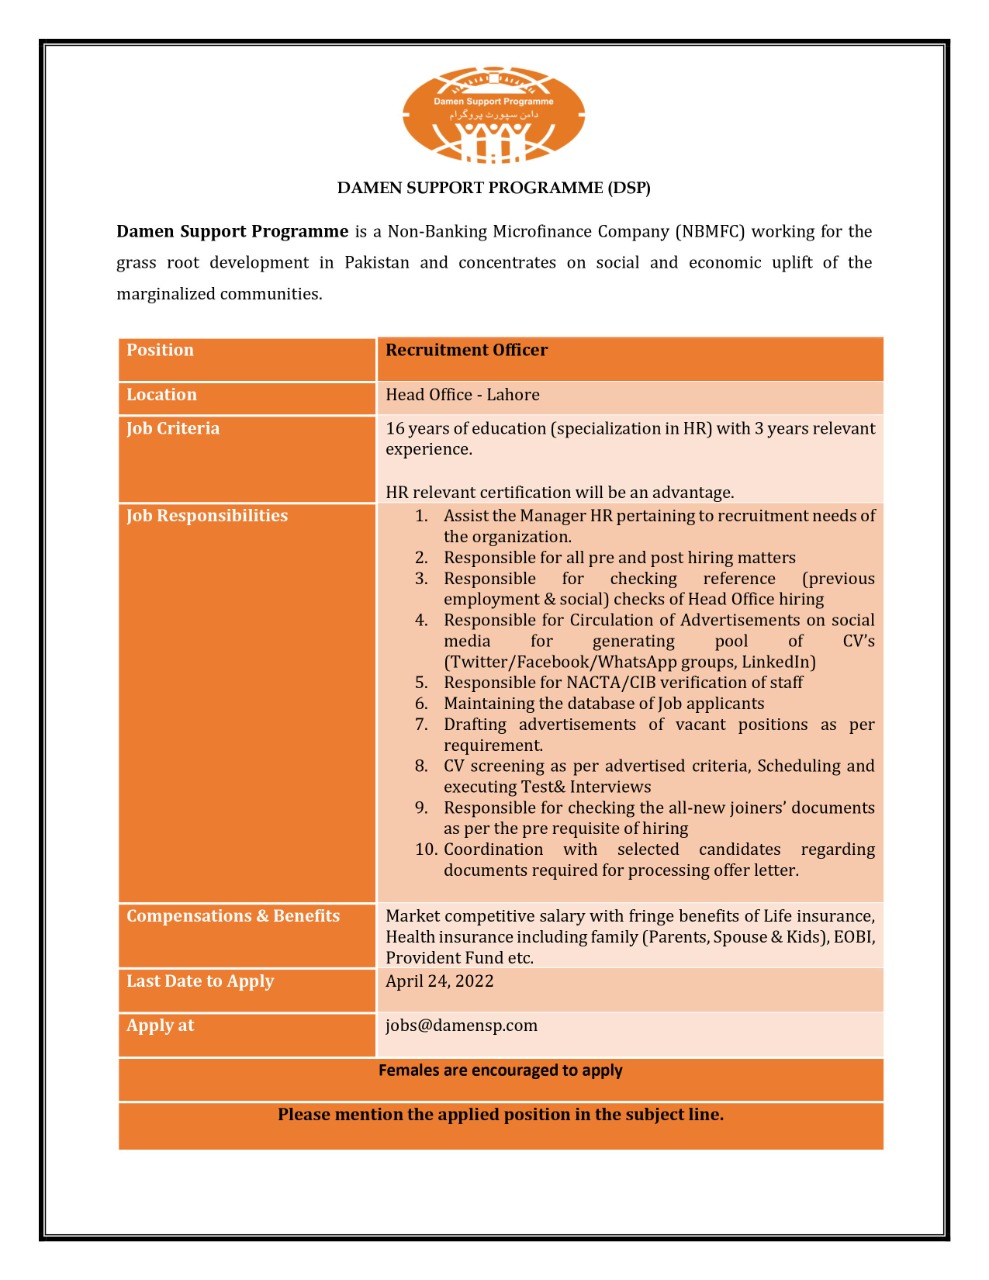 Damen Support Programme- دامن سپورٹ پروگرام (DSP) Jobs 2022